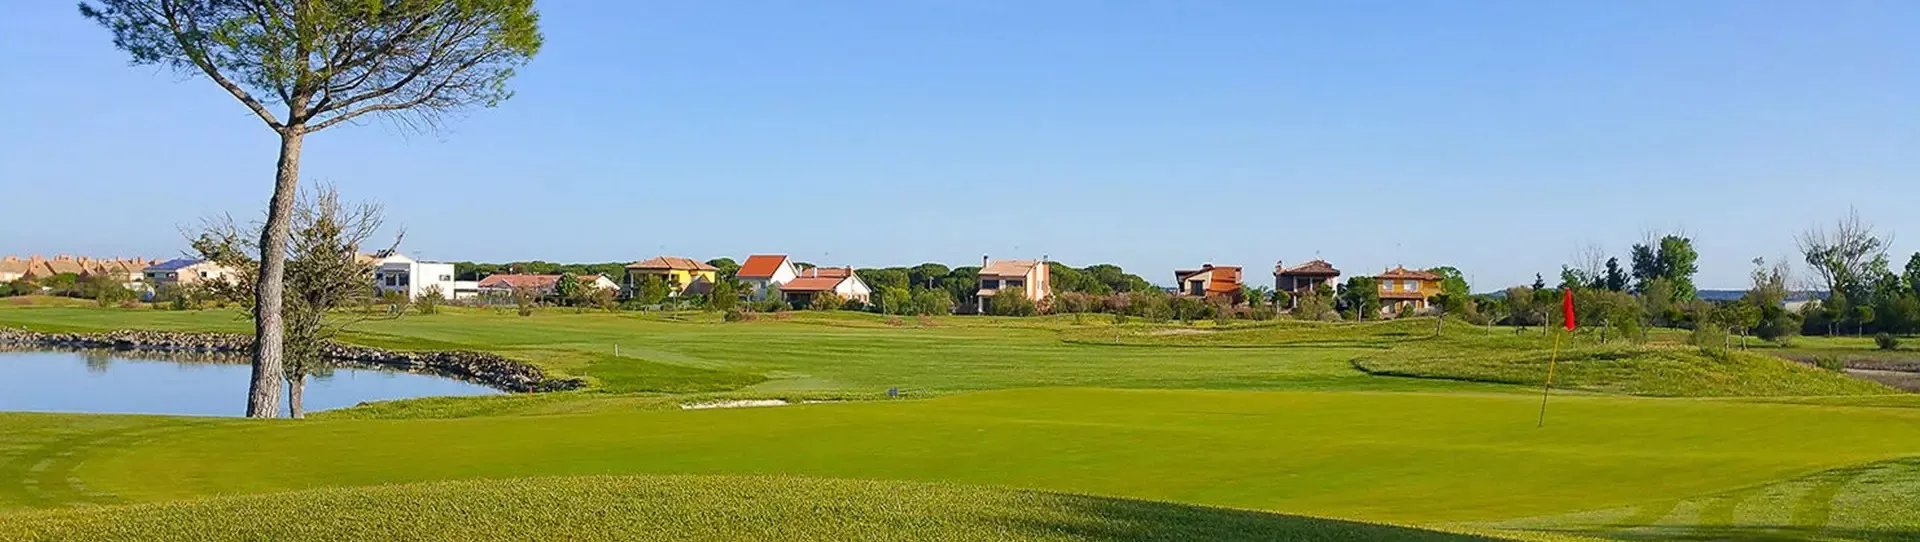 Spain golf courses - Aldeamayor Golf Course - Photo 1